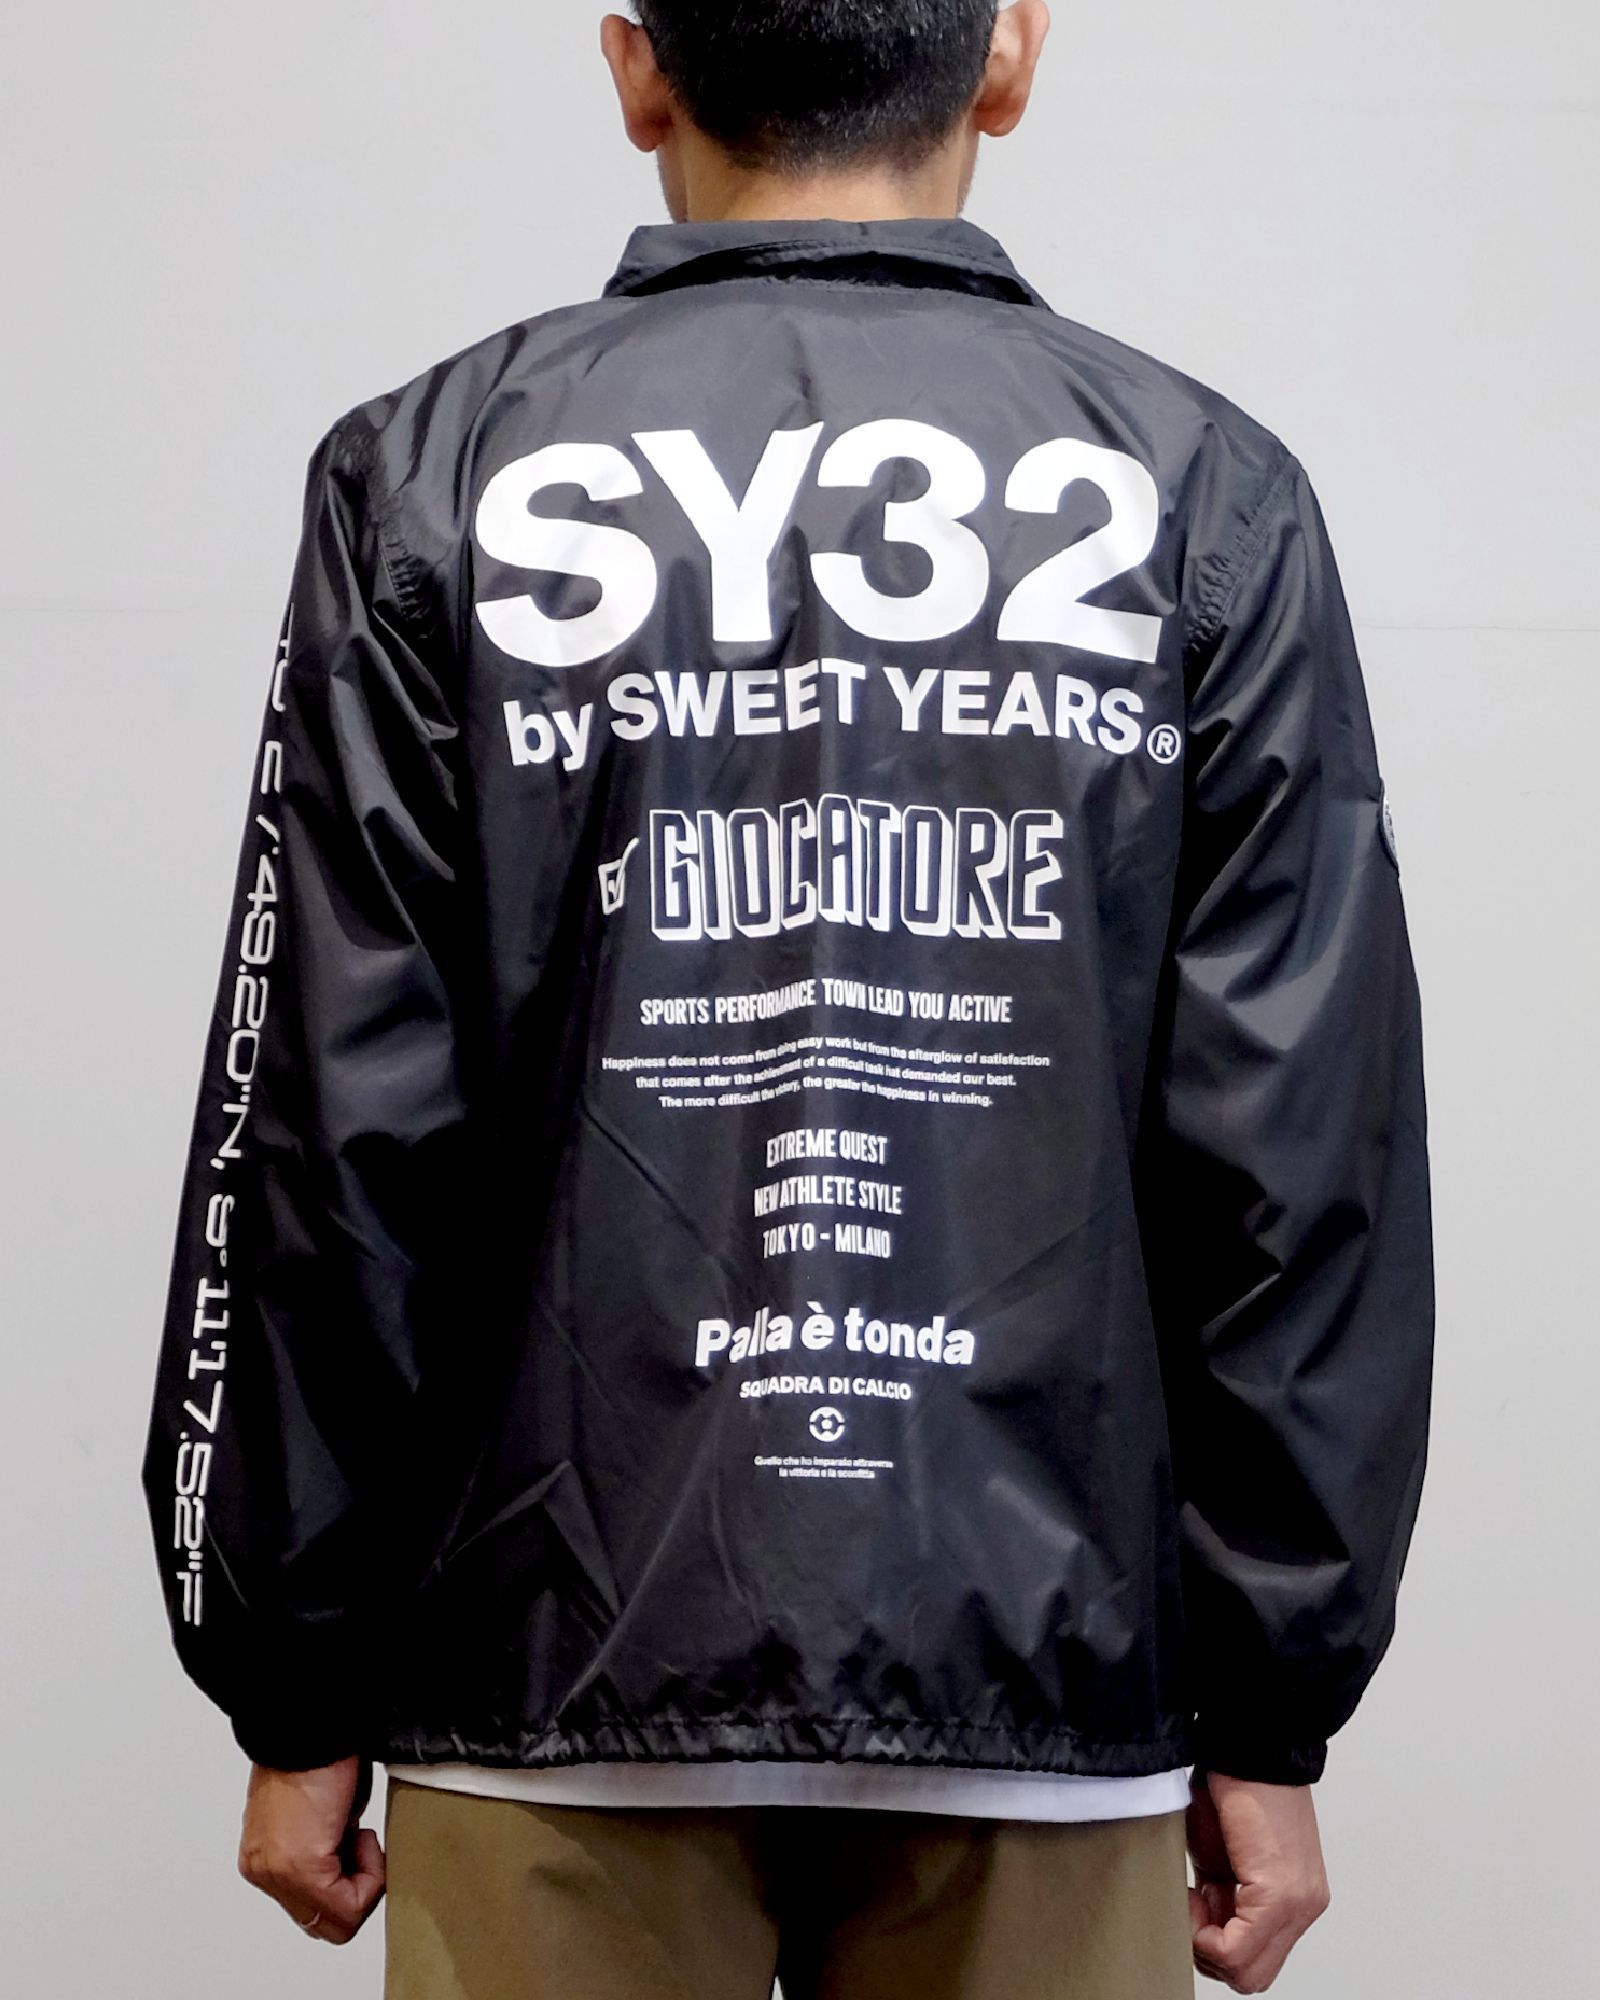 SY32 by SWEET YEARS - ジョカトーレ コーチジャケット (BLACK 